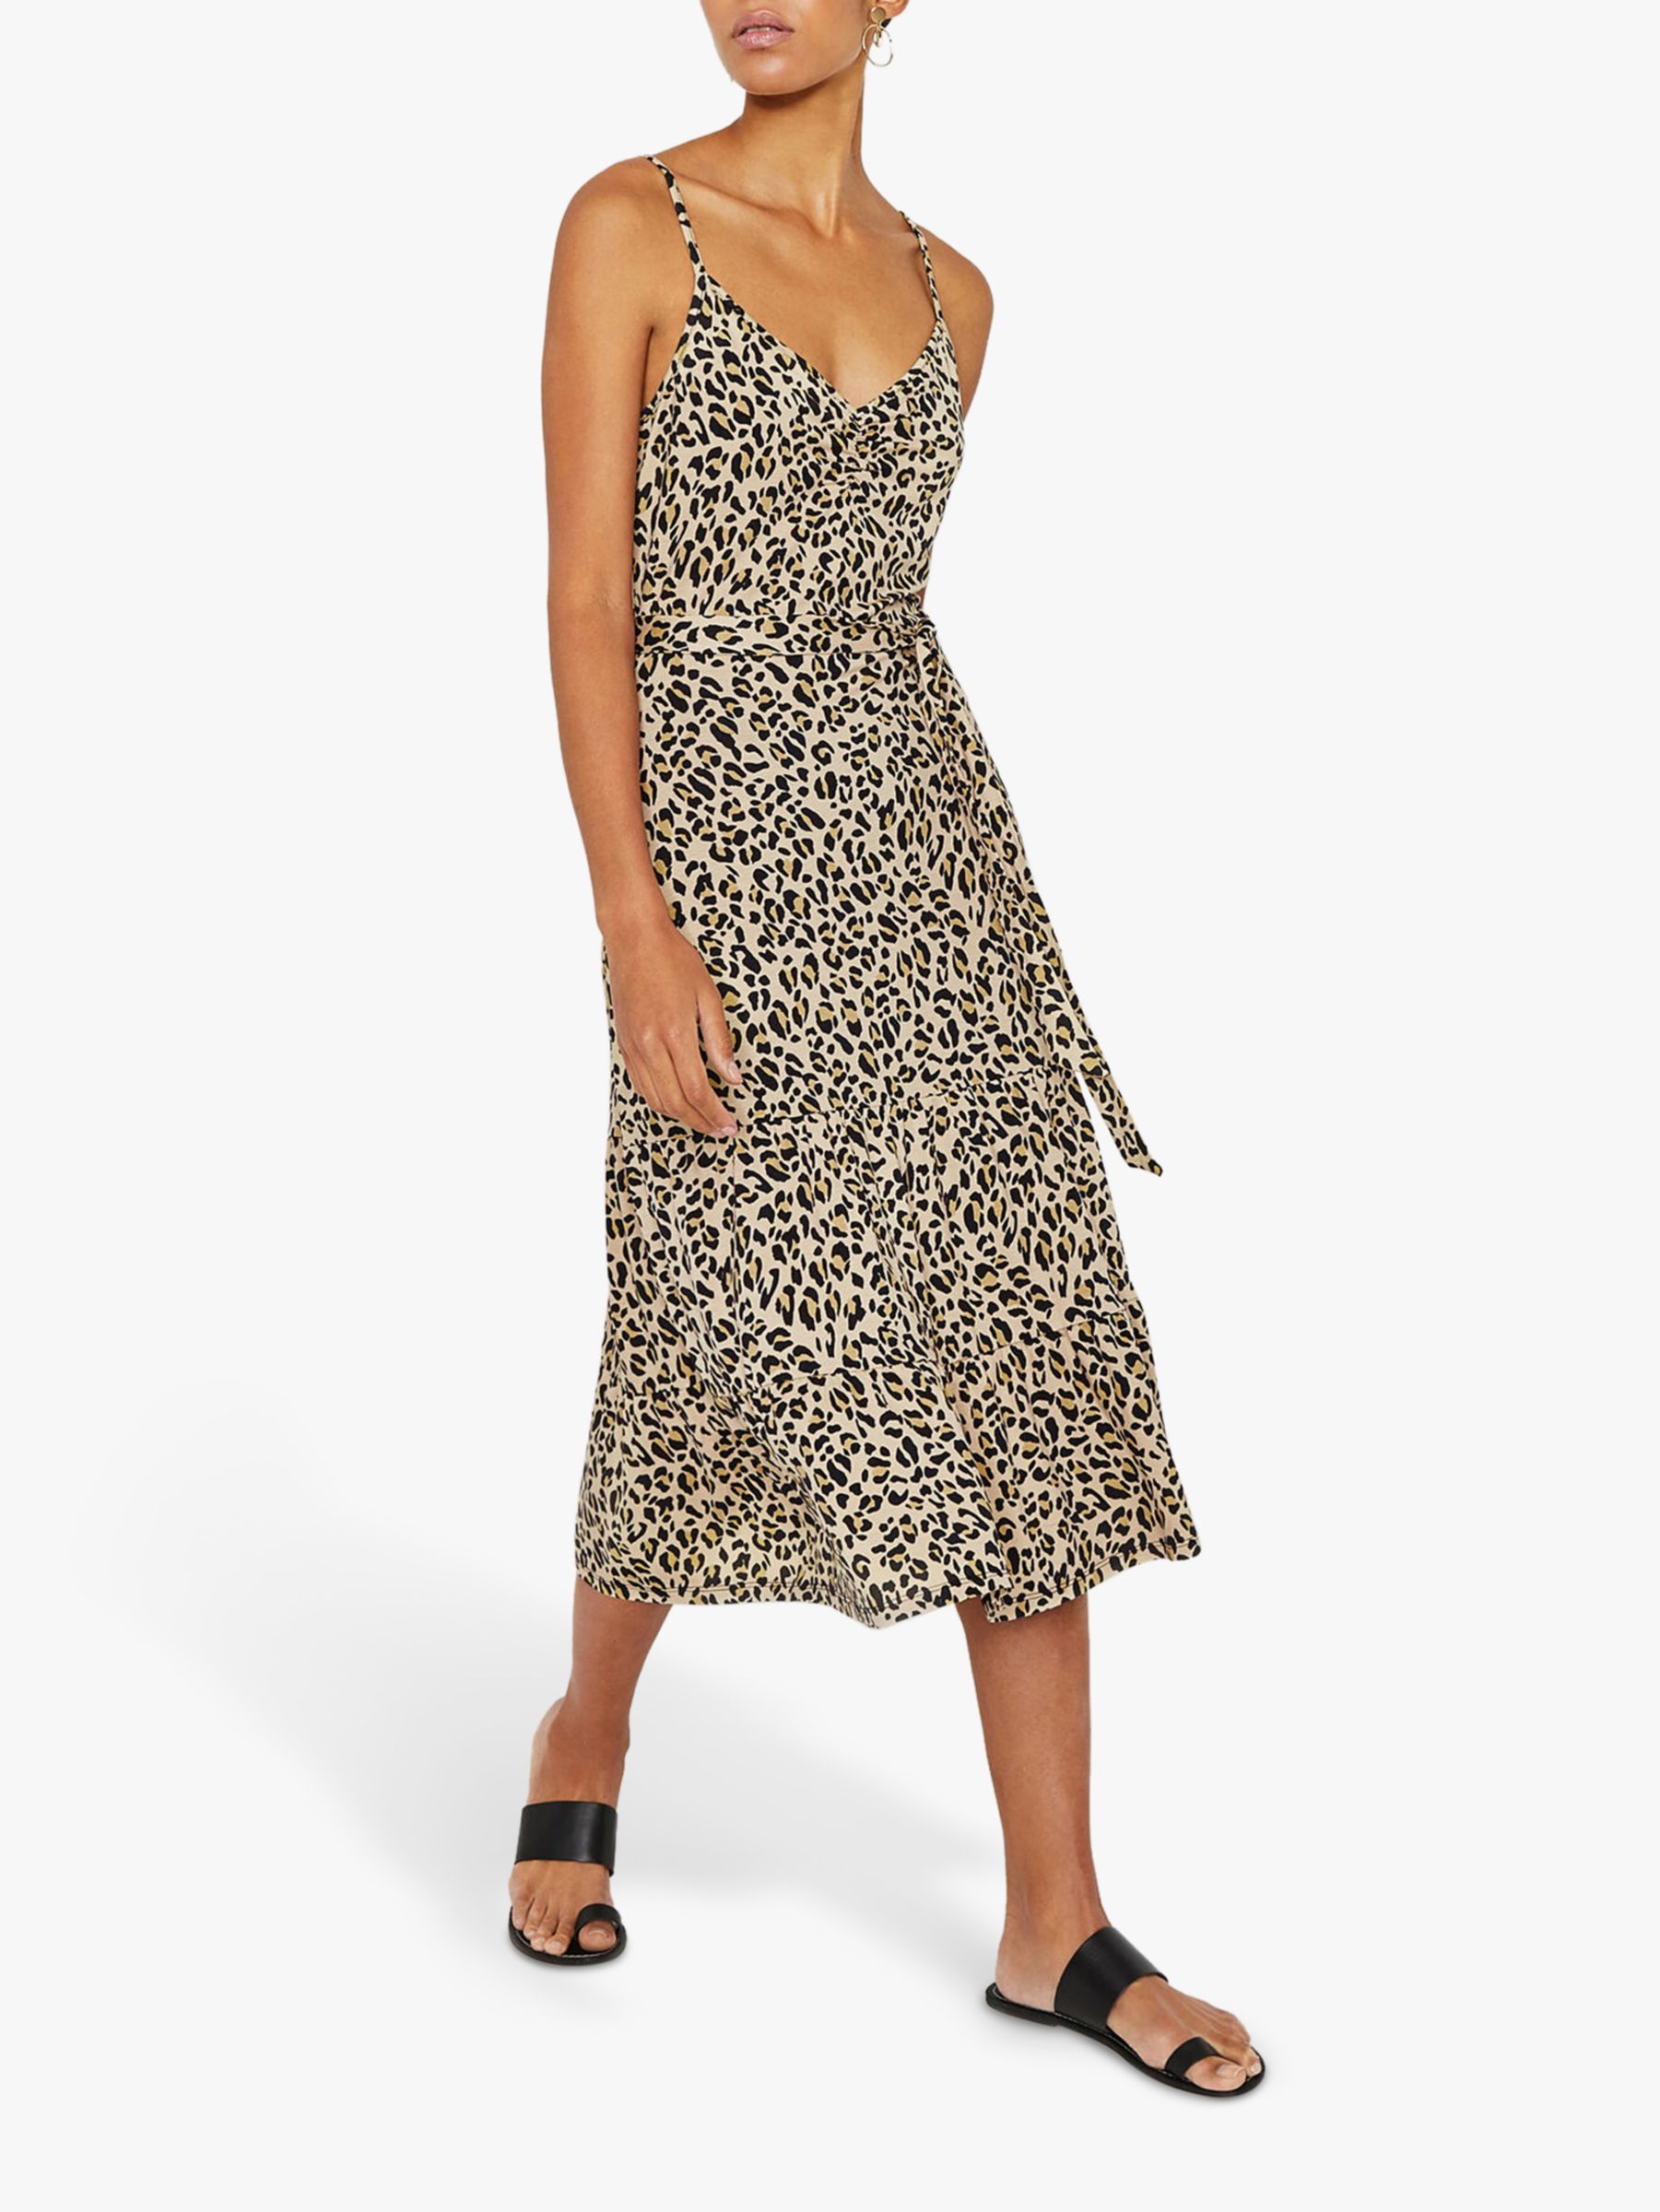 leopard print dress warehouse